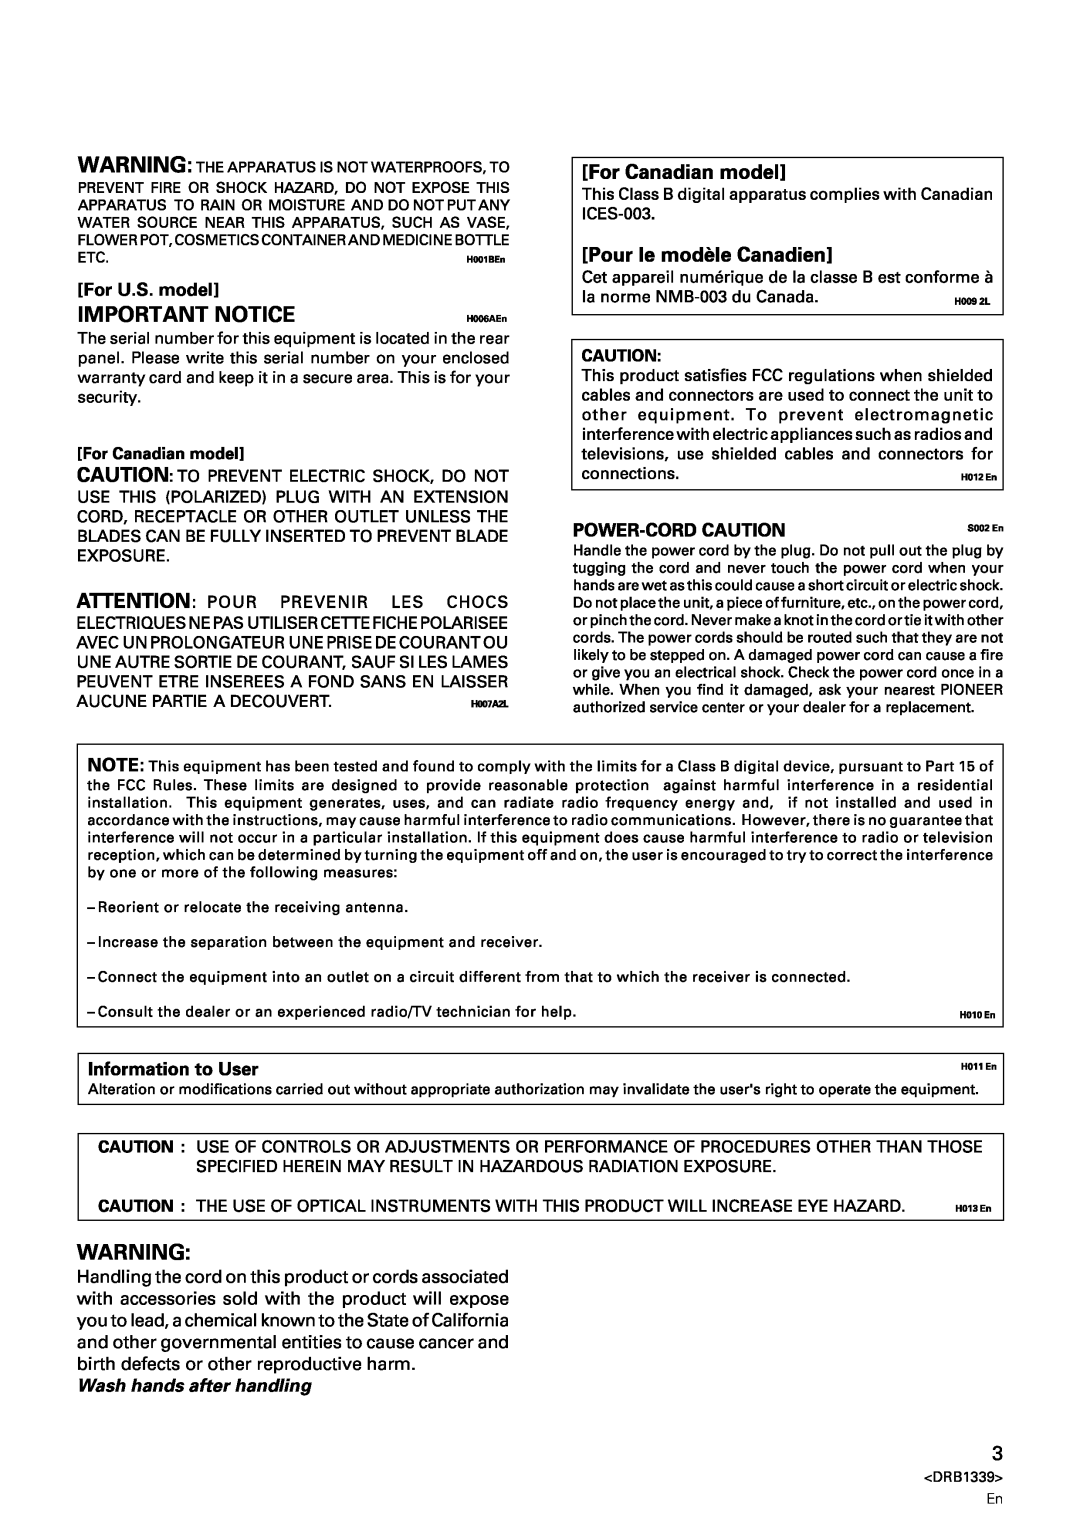 Pioneer CDJ-1000MK2 manual For U.S. model, Important Notice, Wash hands after handling 